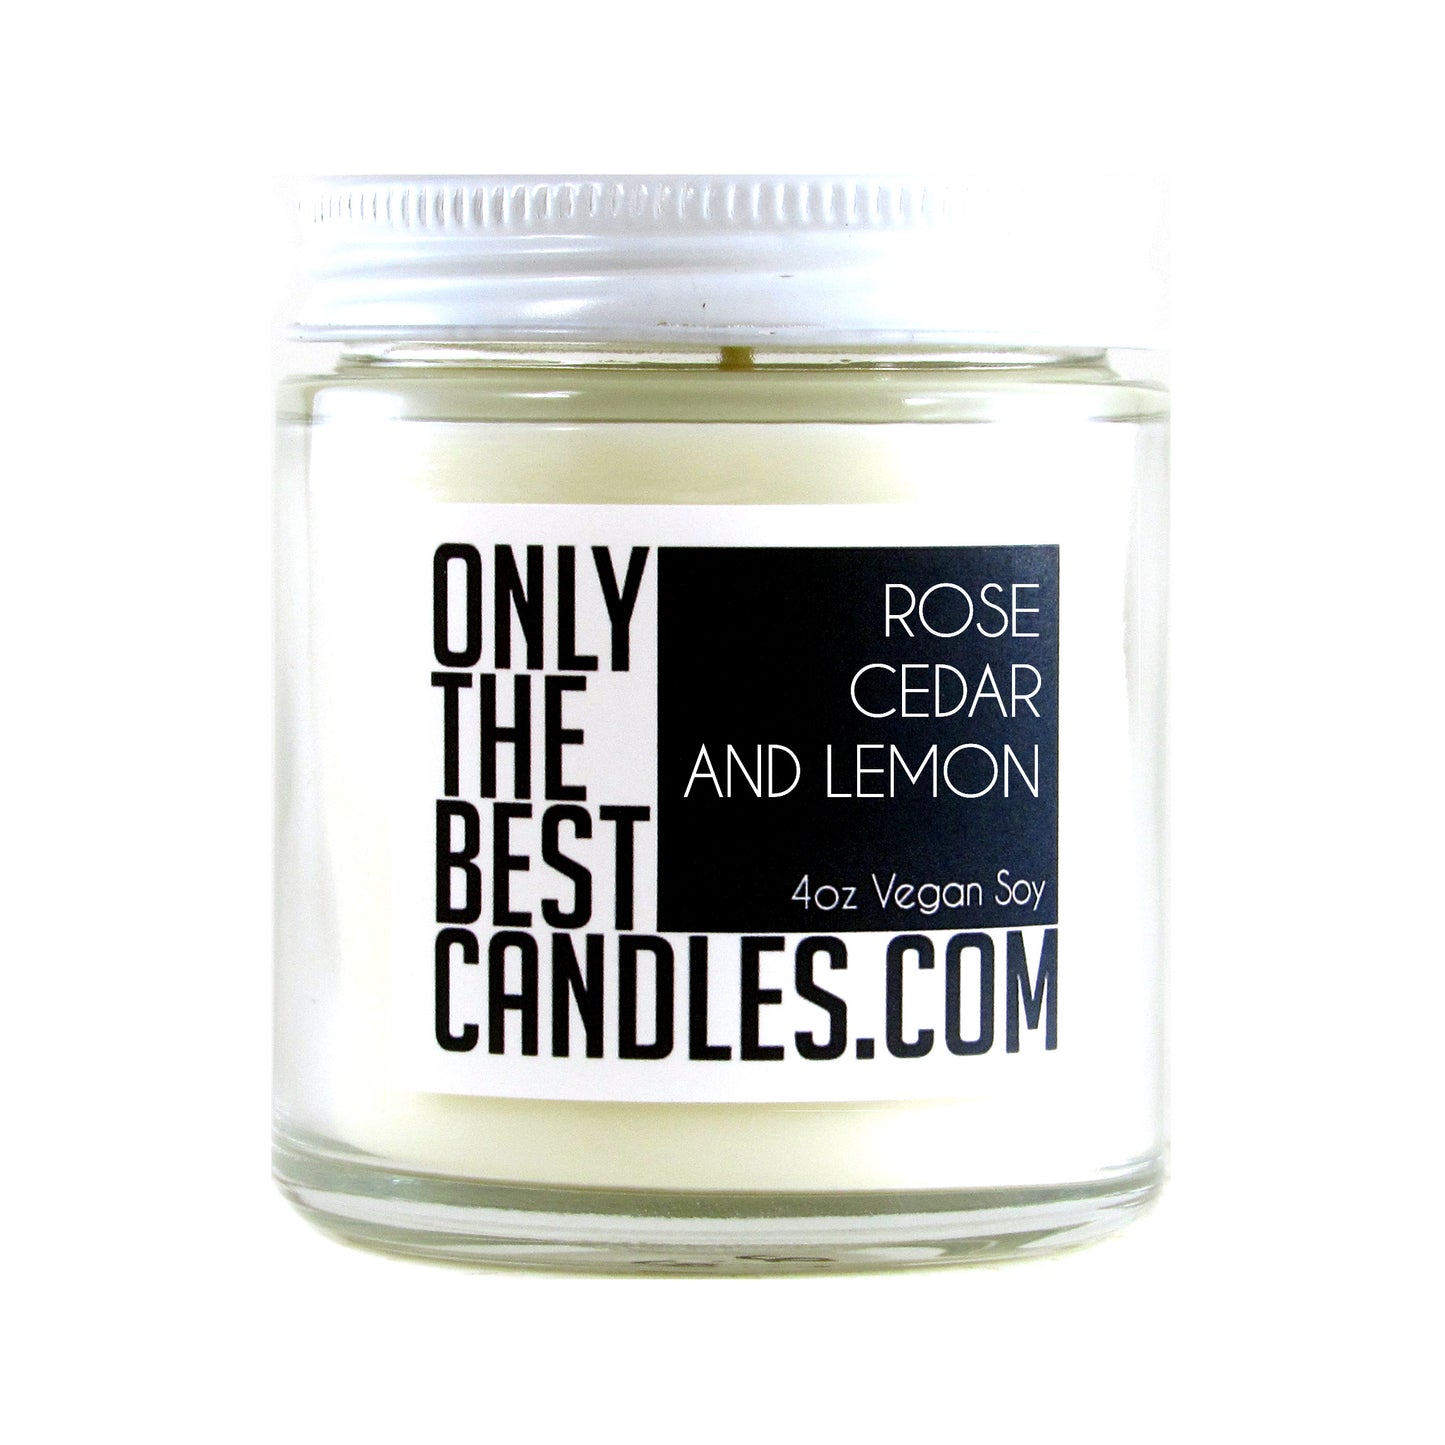 Rose Cedar and Lemon 4oz Candle